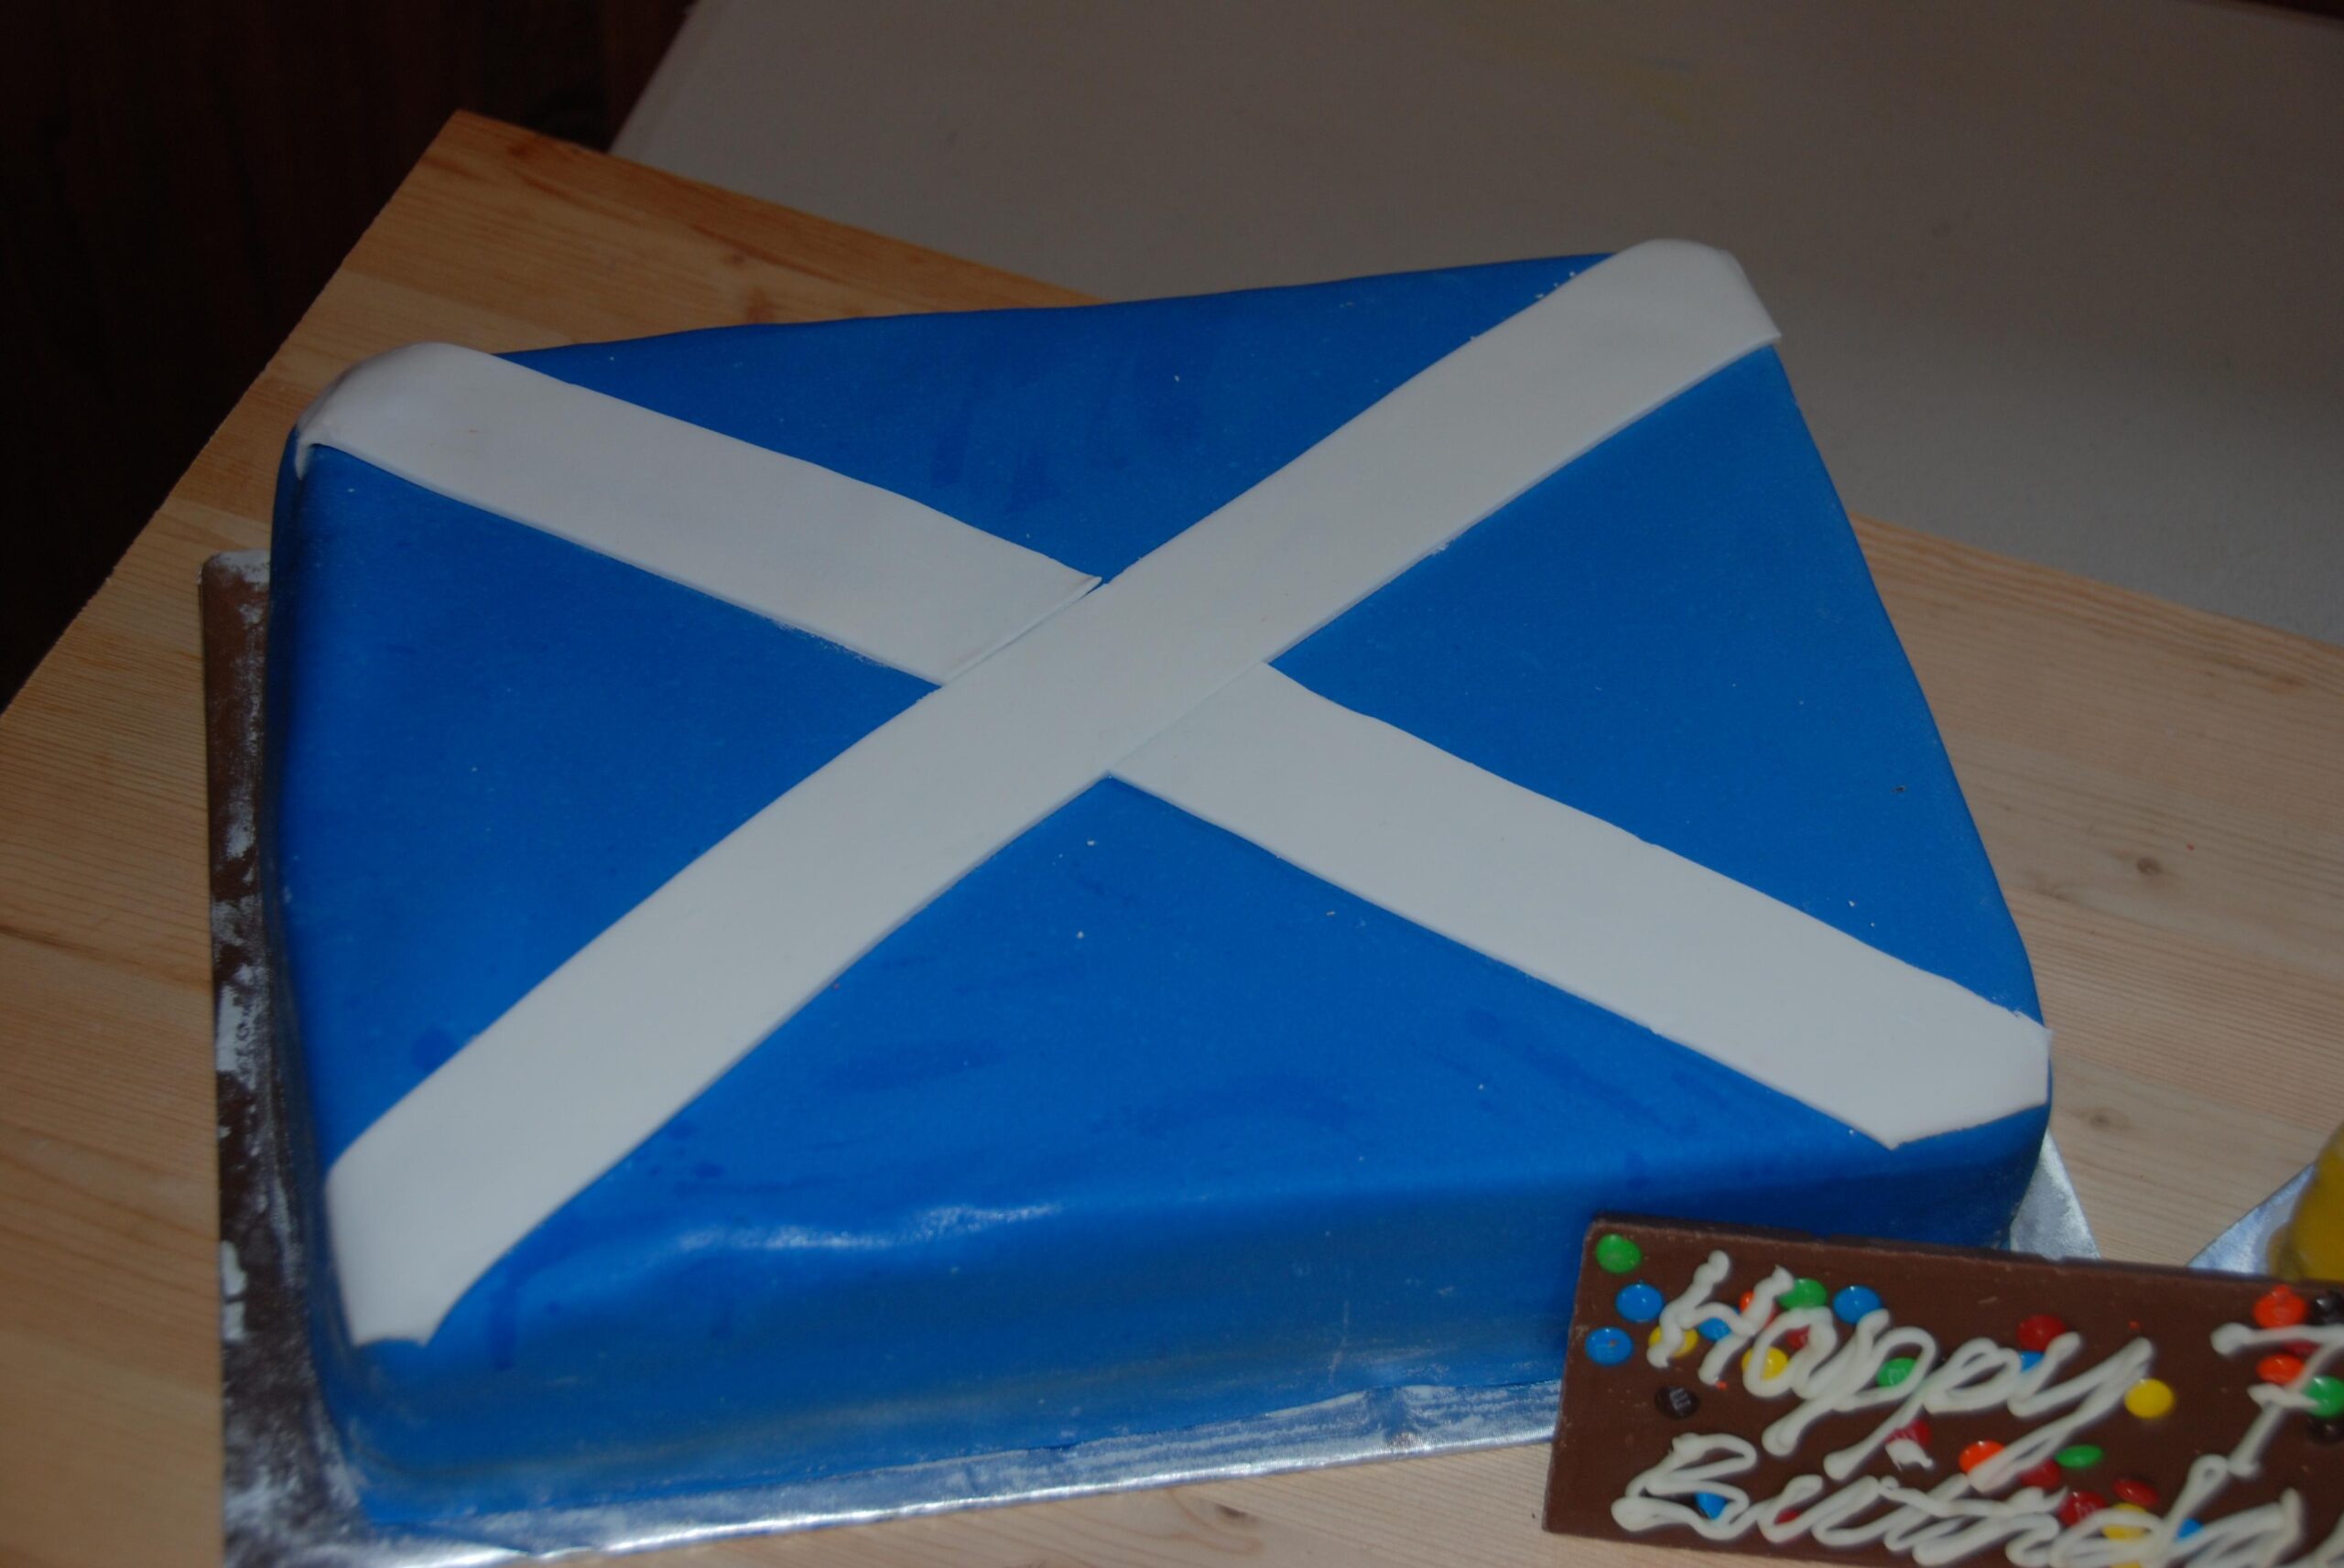  Scottish pride in a sheet cake